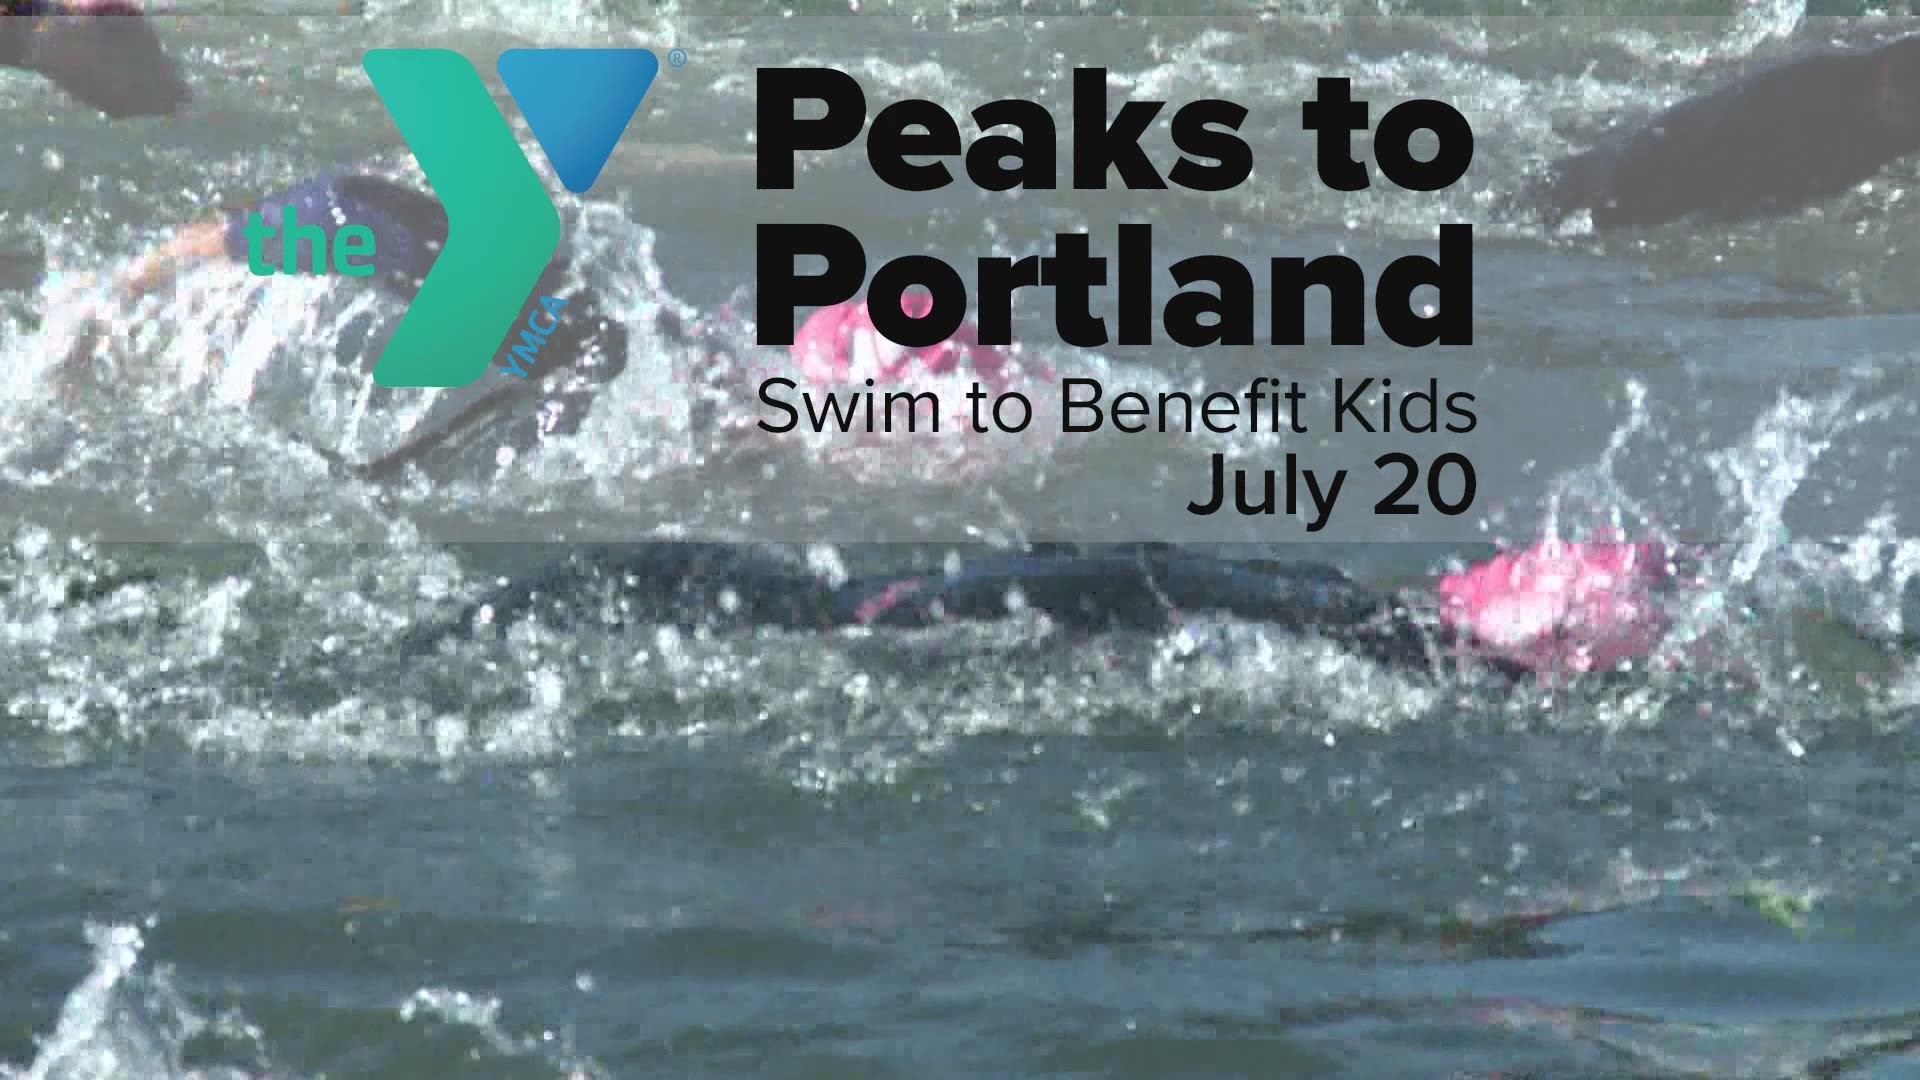 Register for the 2019 Peaks to Portland swim